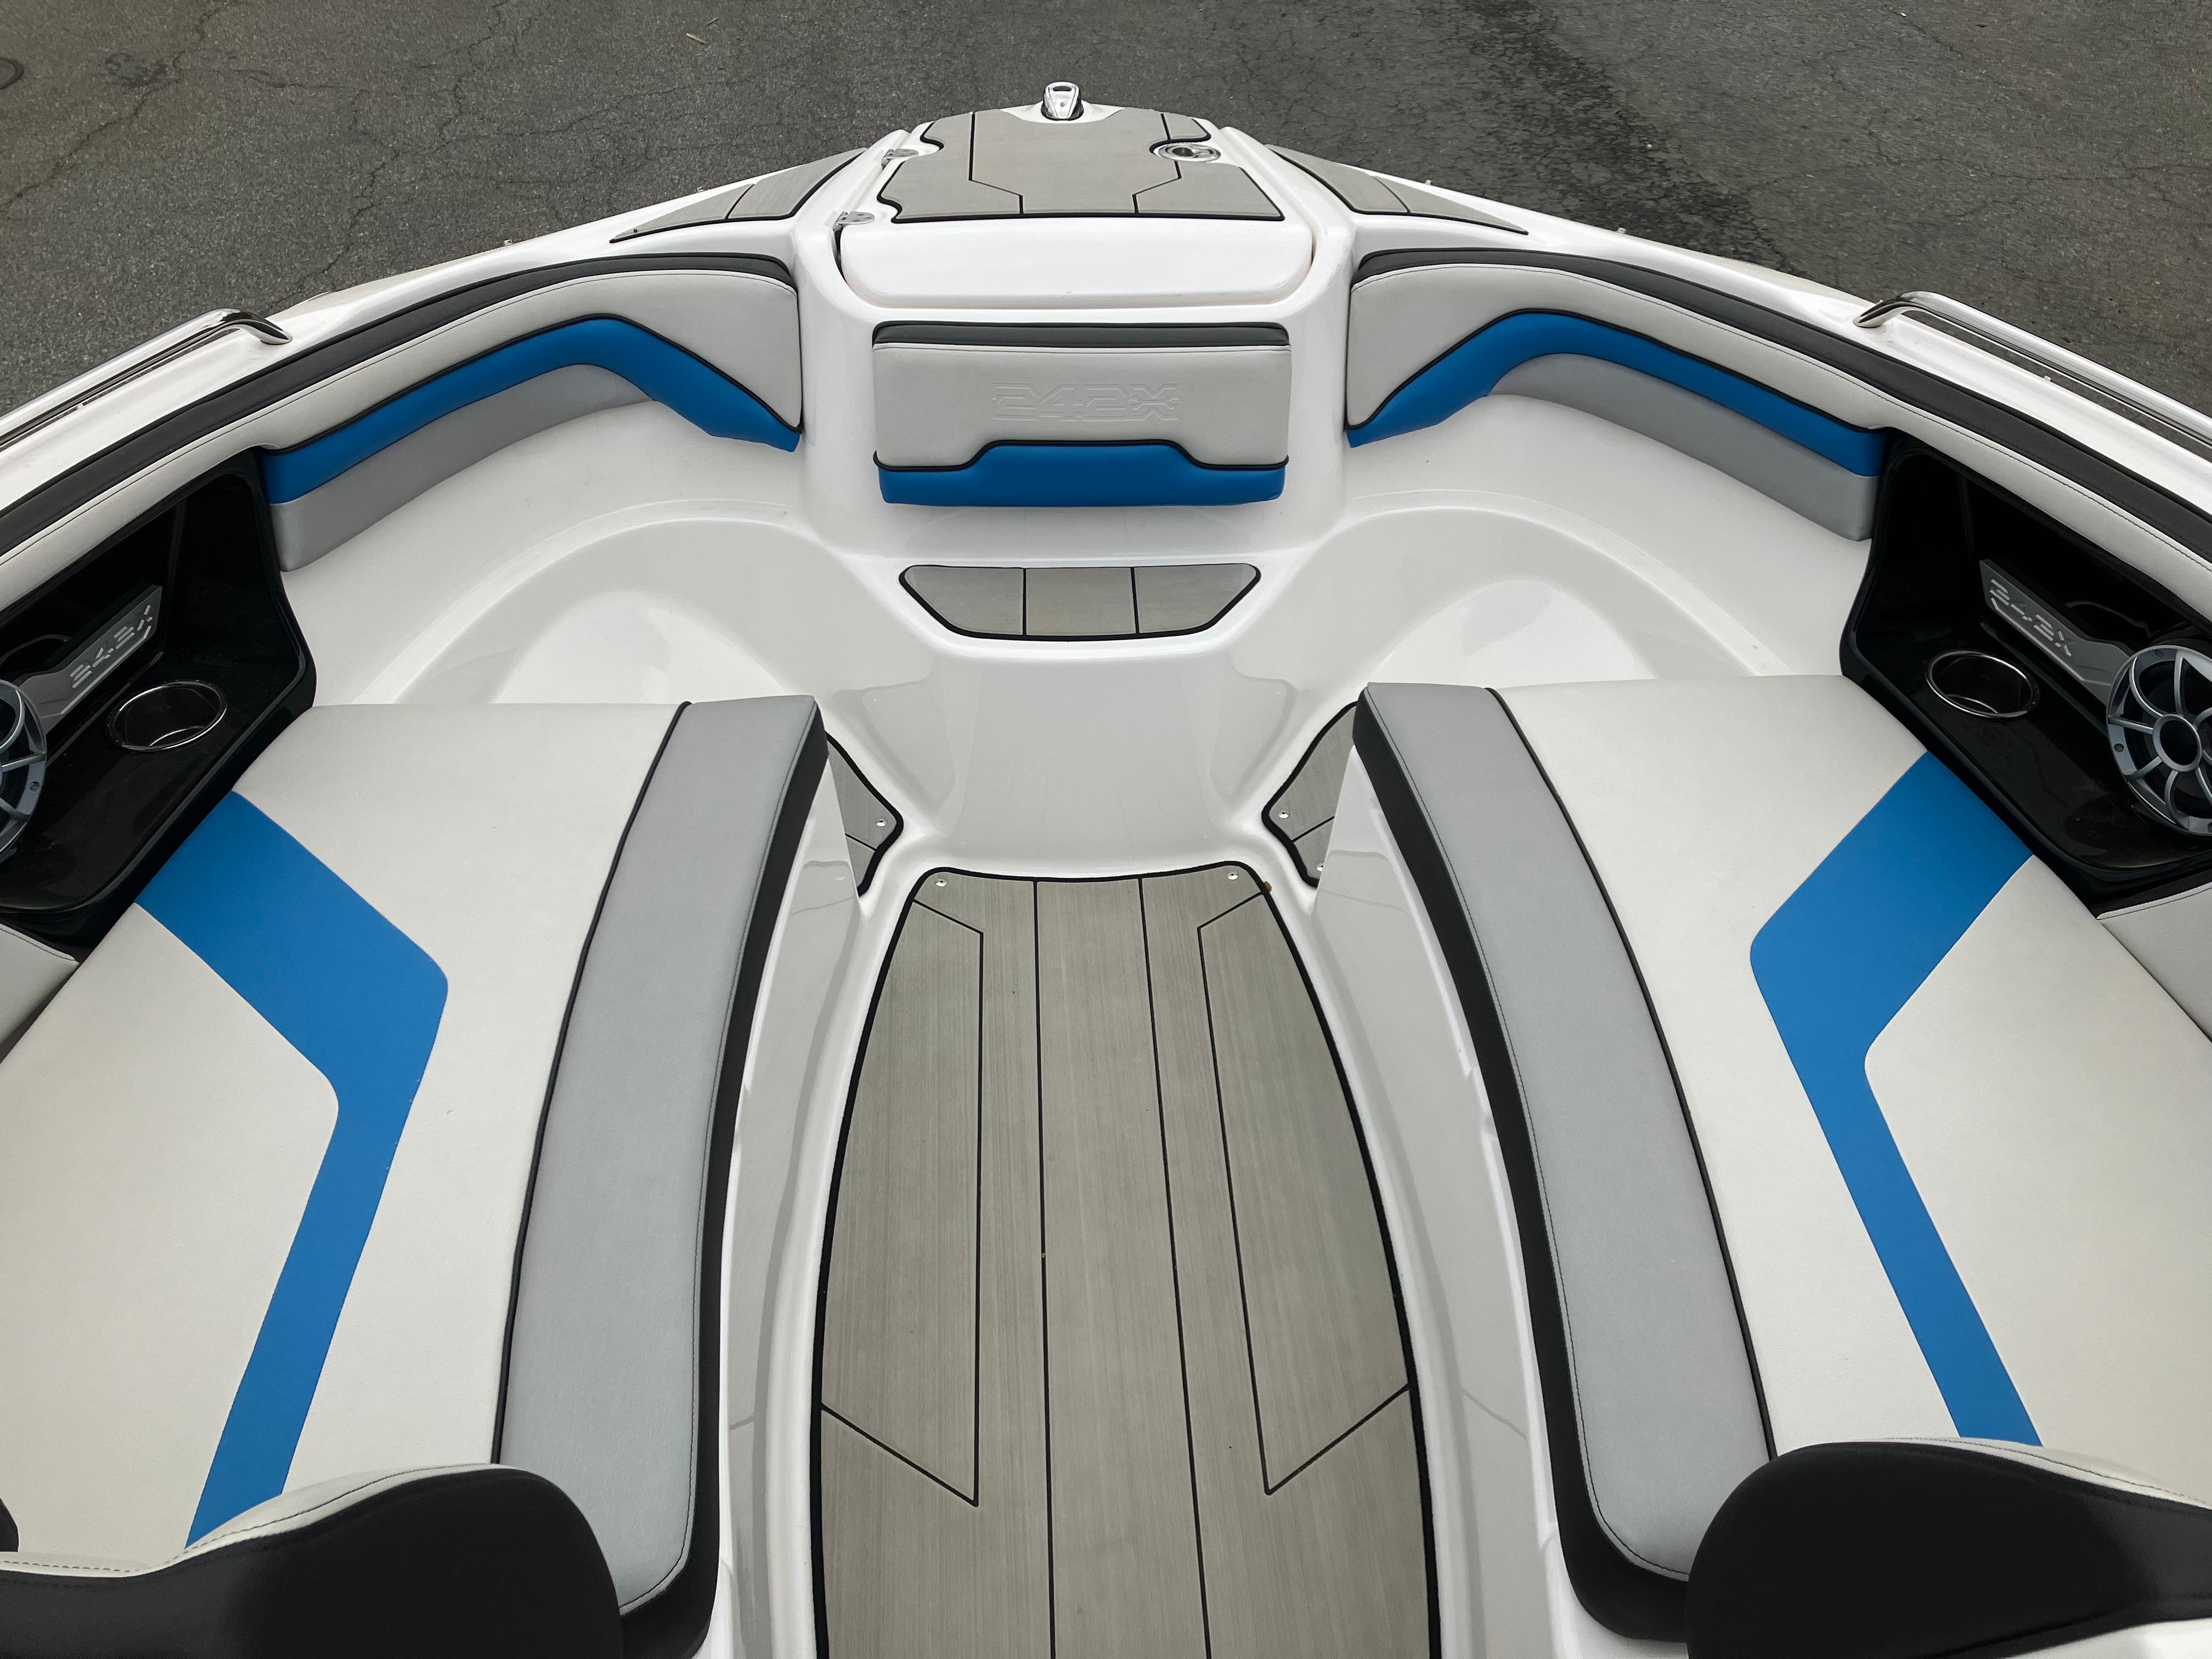 2020 Yamaha Boats 242X